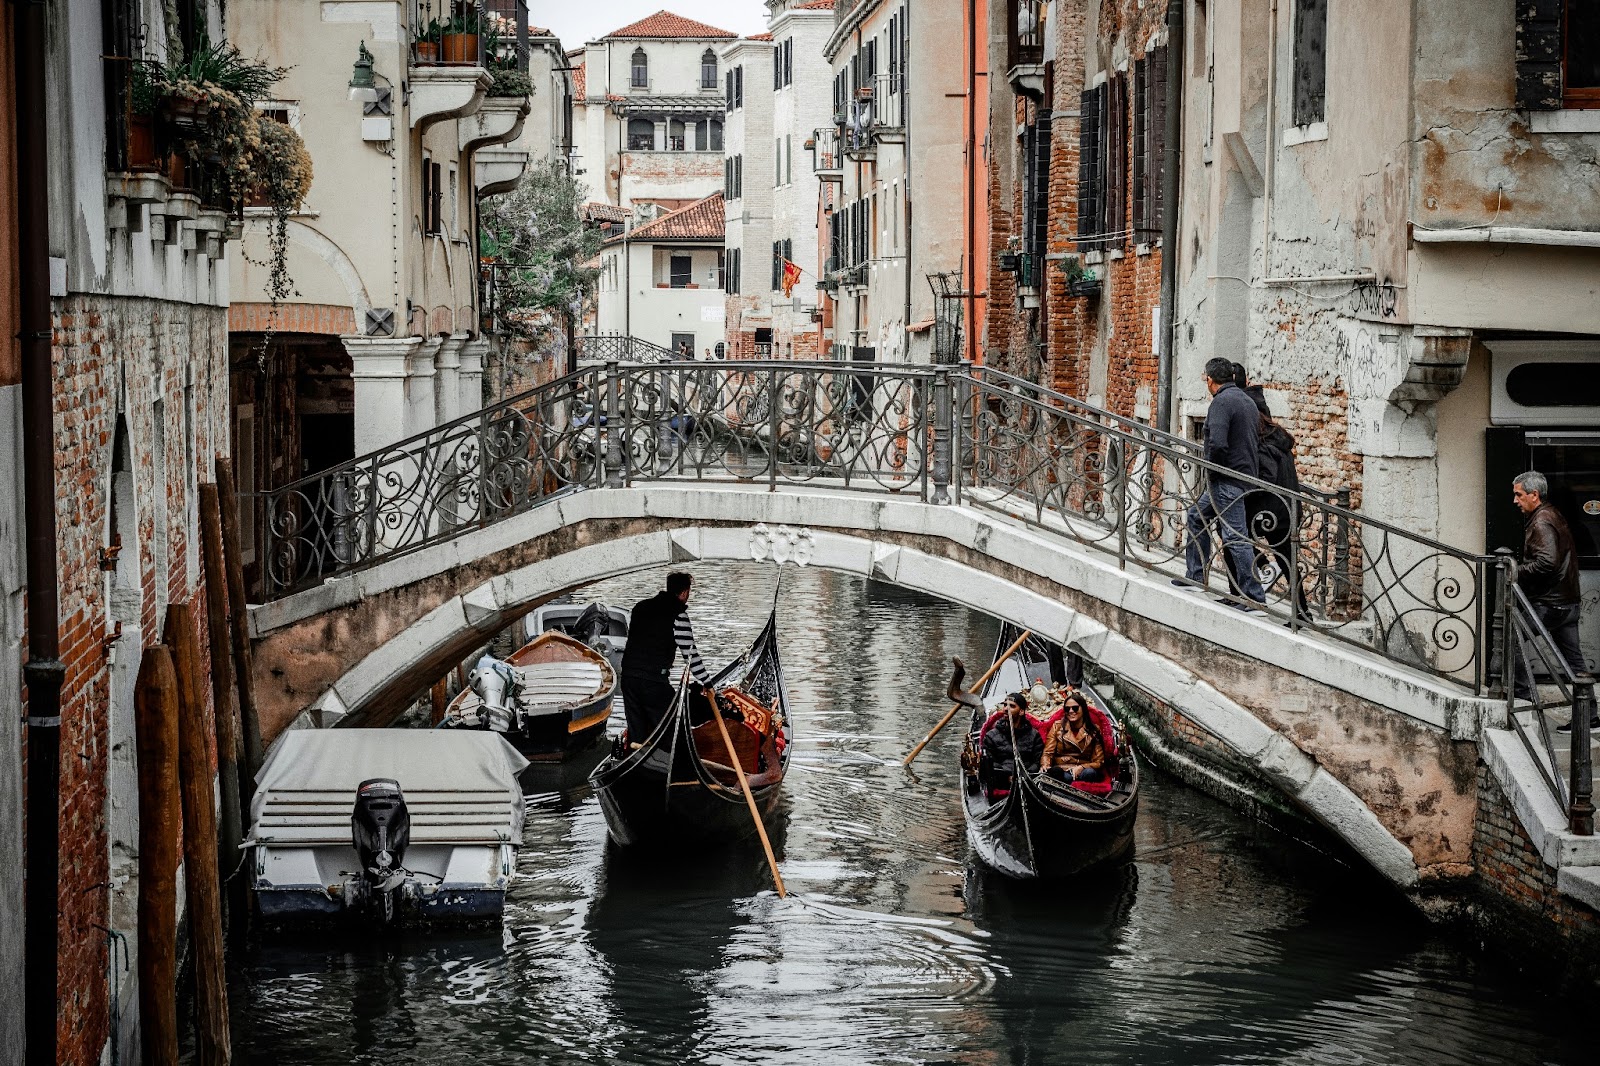 A romantic gondola ride through the narrow canals of Venice.